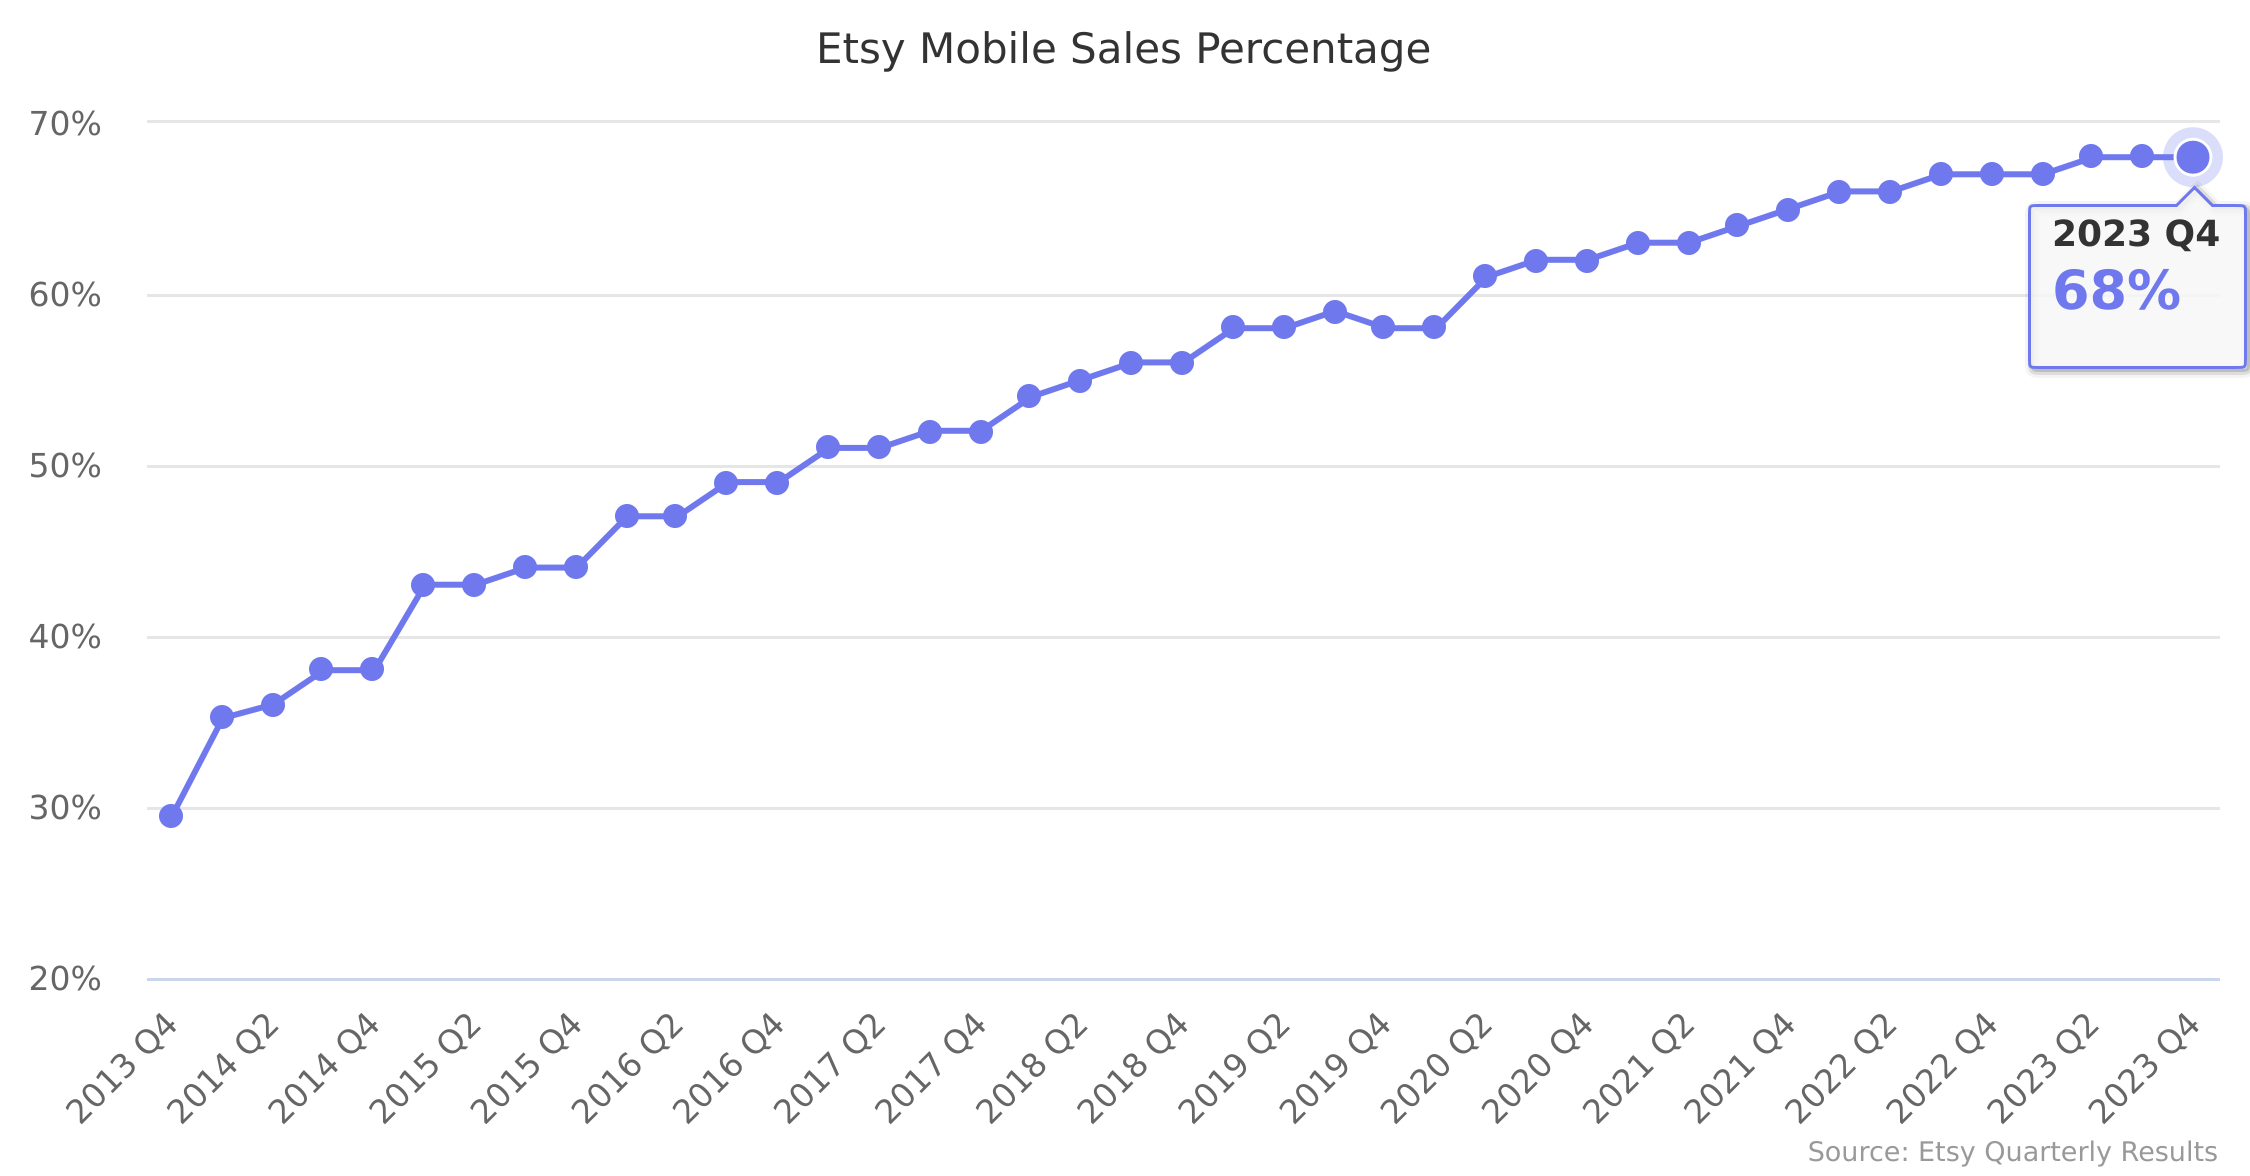 Etsy Mobile Sales Percentage 2013-2022